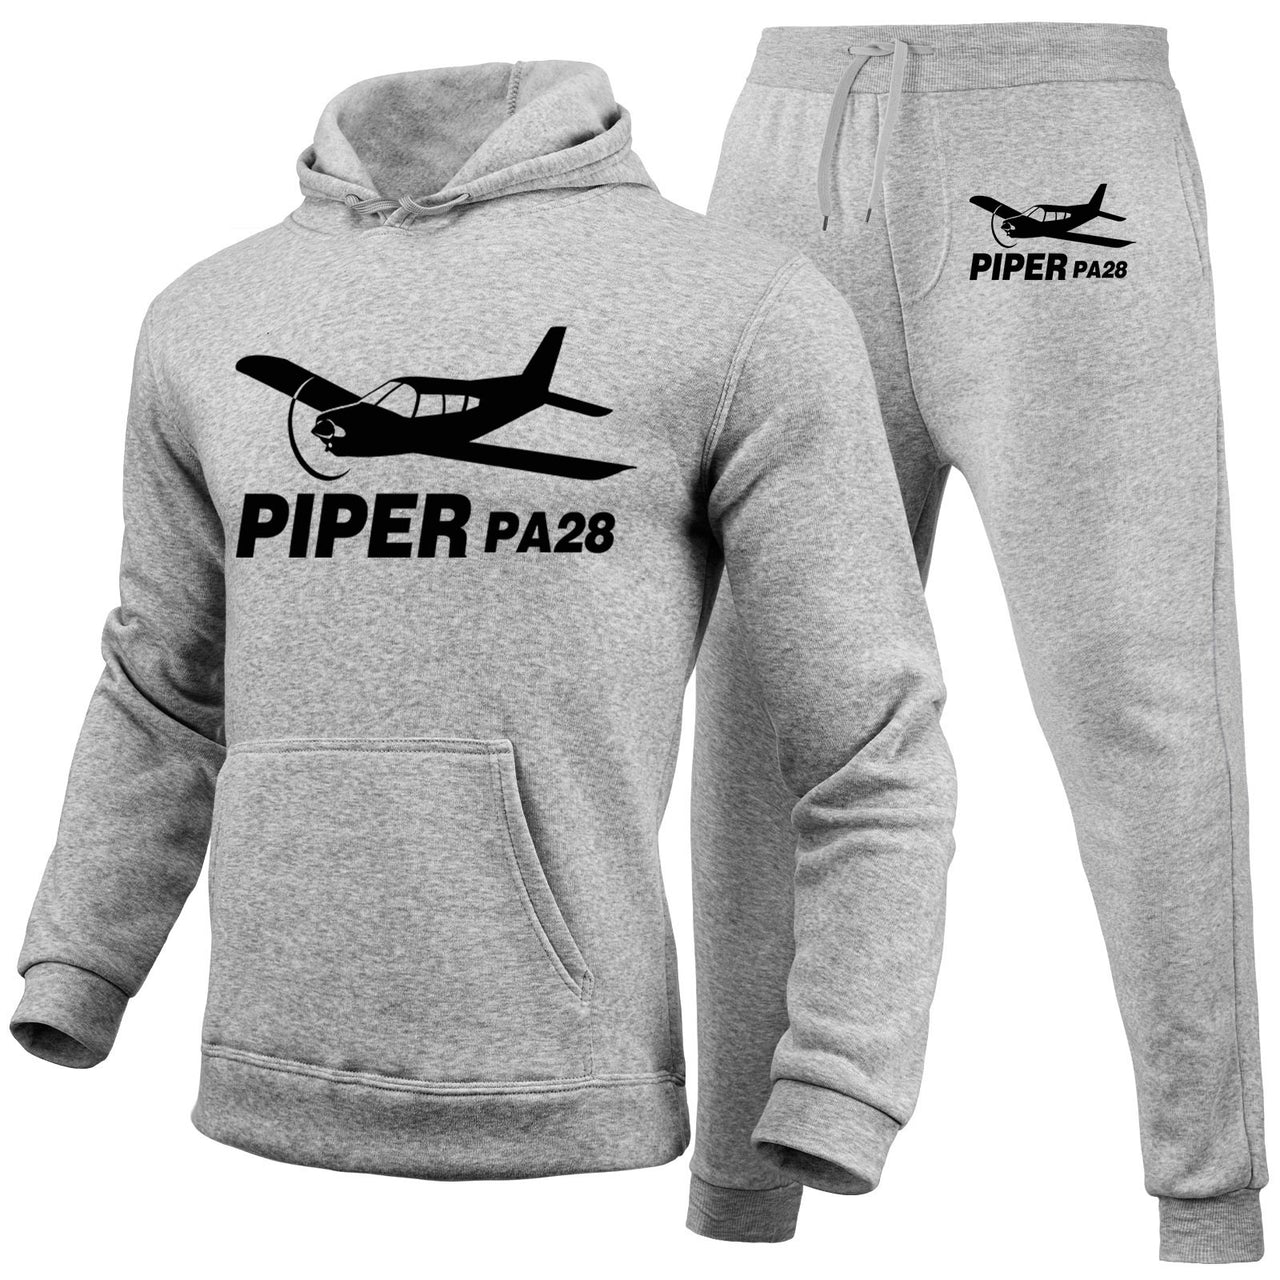 The Piper PA28 Designed Hoodies & Sweatpants Set